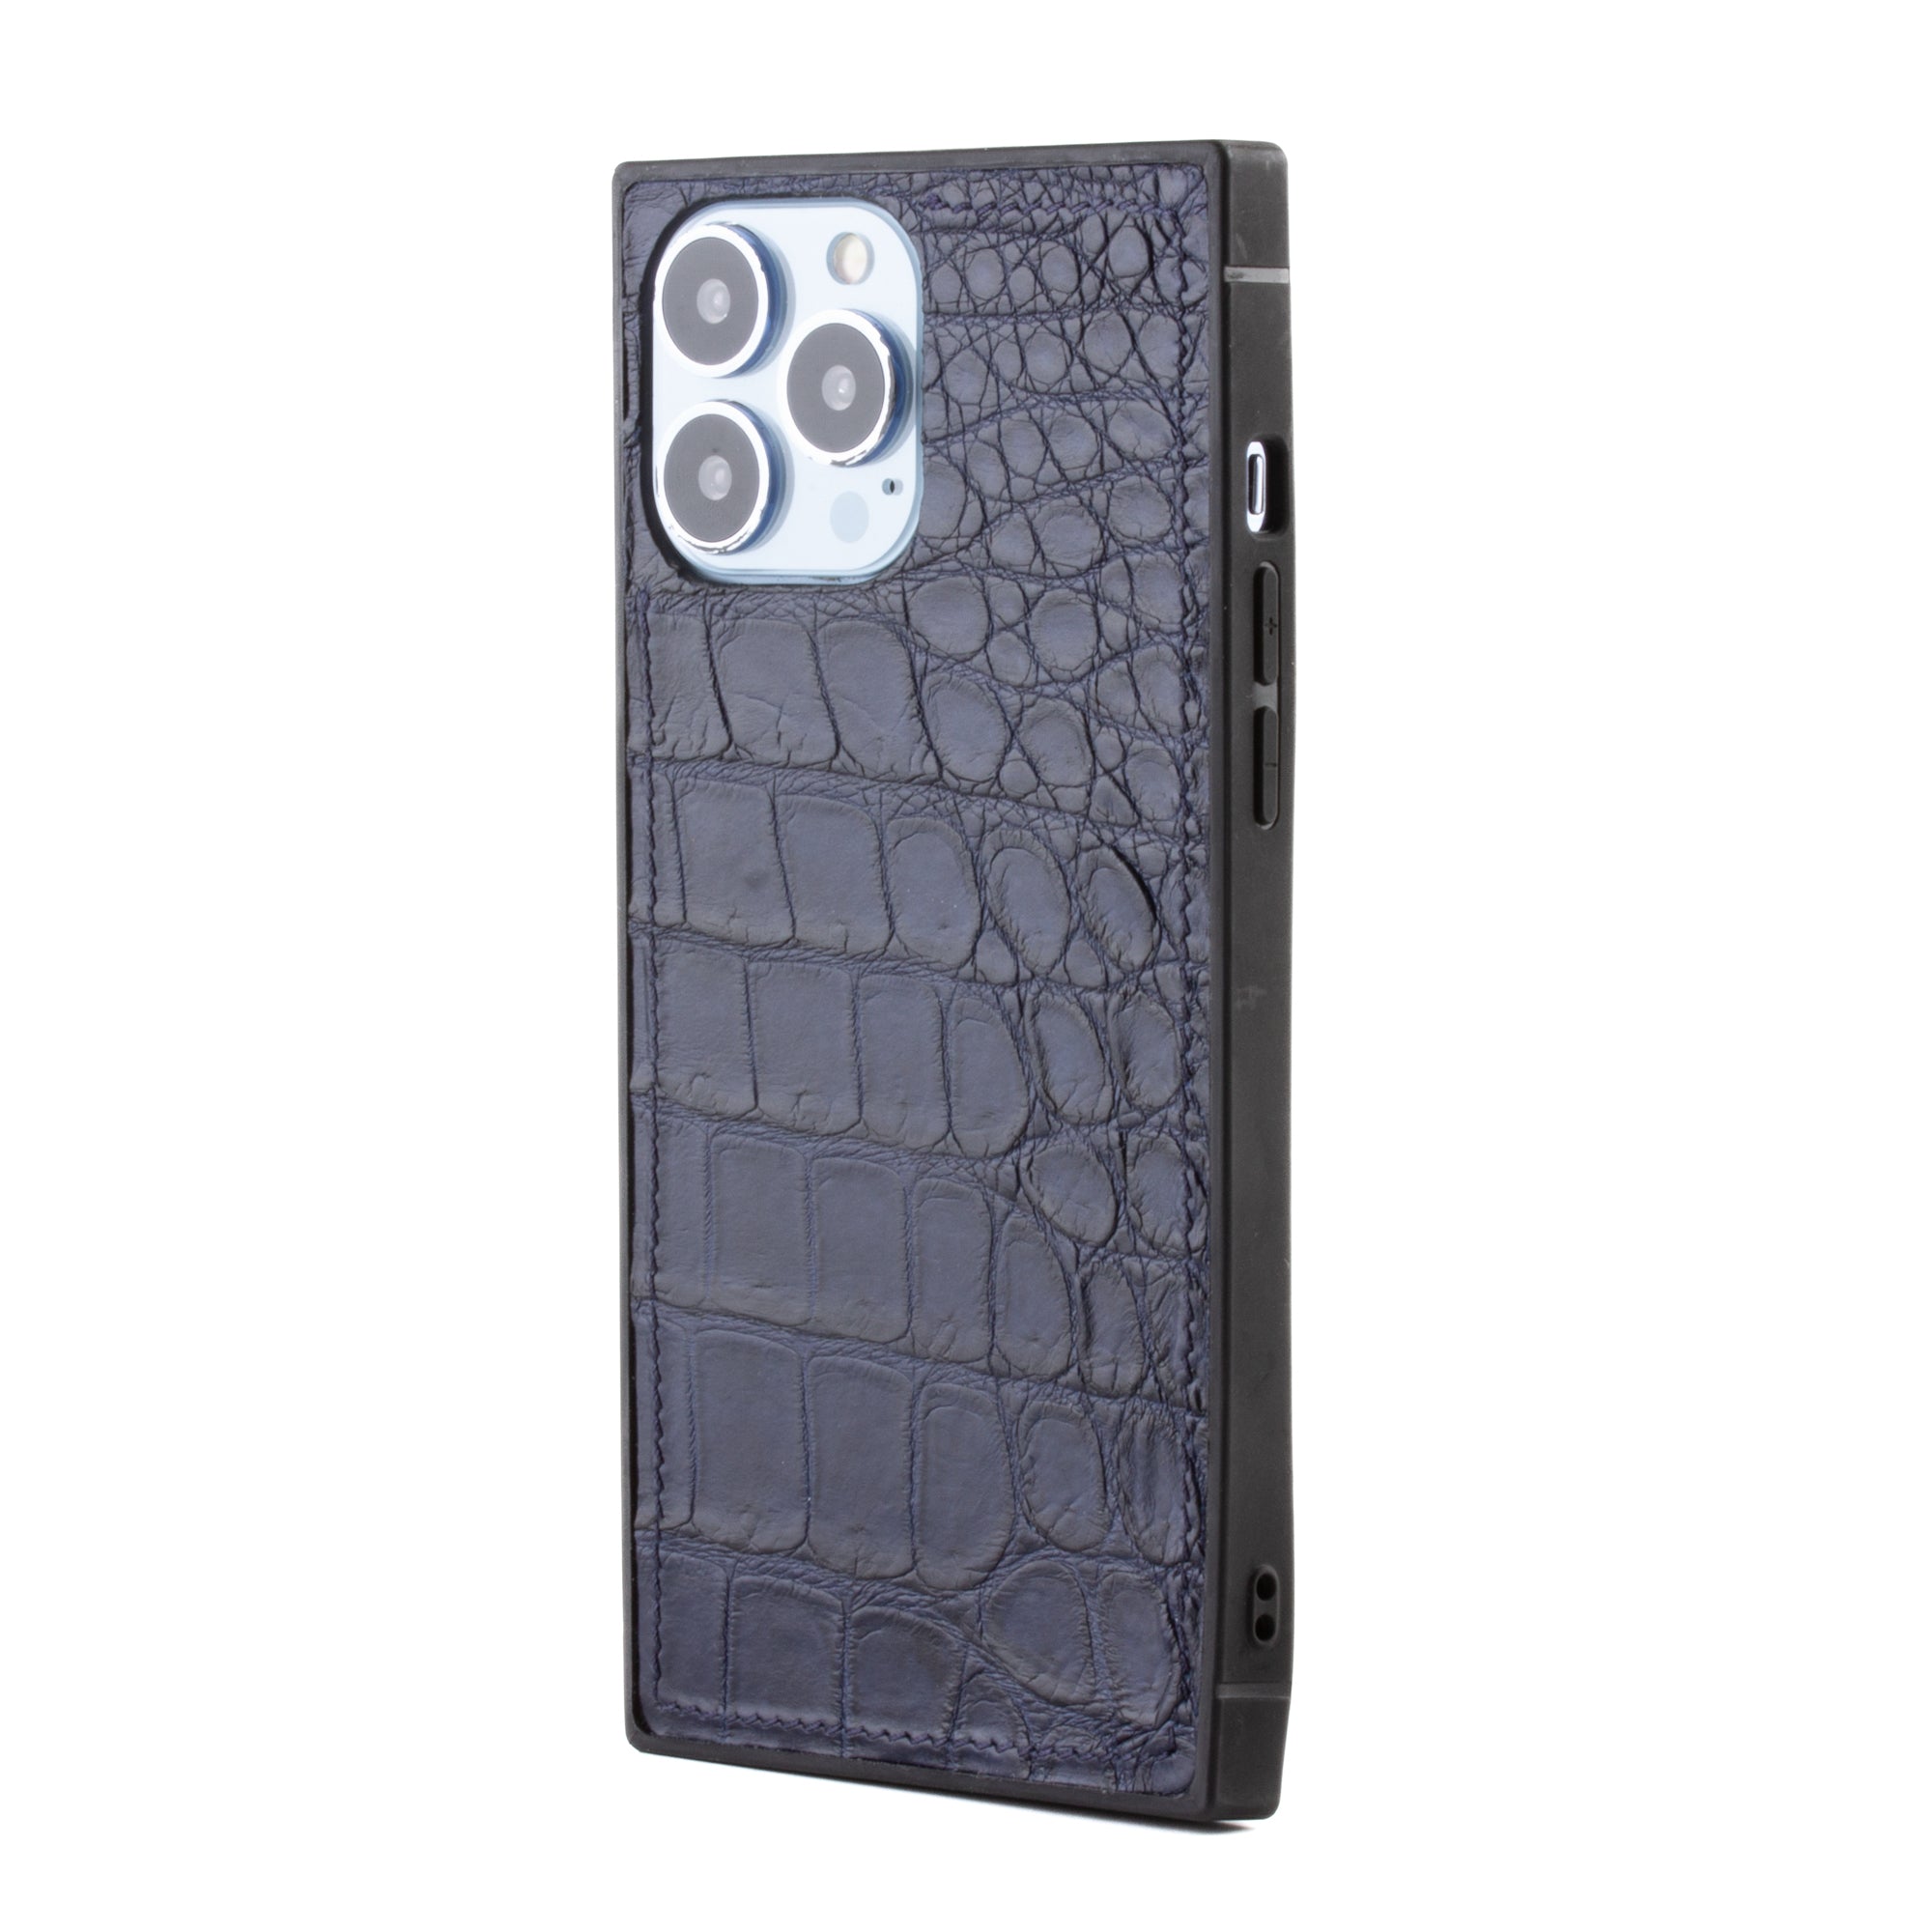 Vente exclusive - Coque "Square case" cuir pour iPhone 13 Pro Max - Alligator Bleu Marine